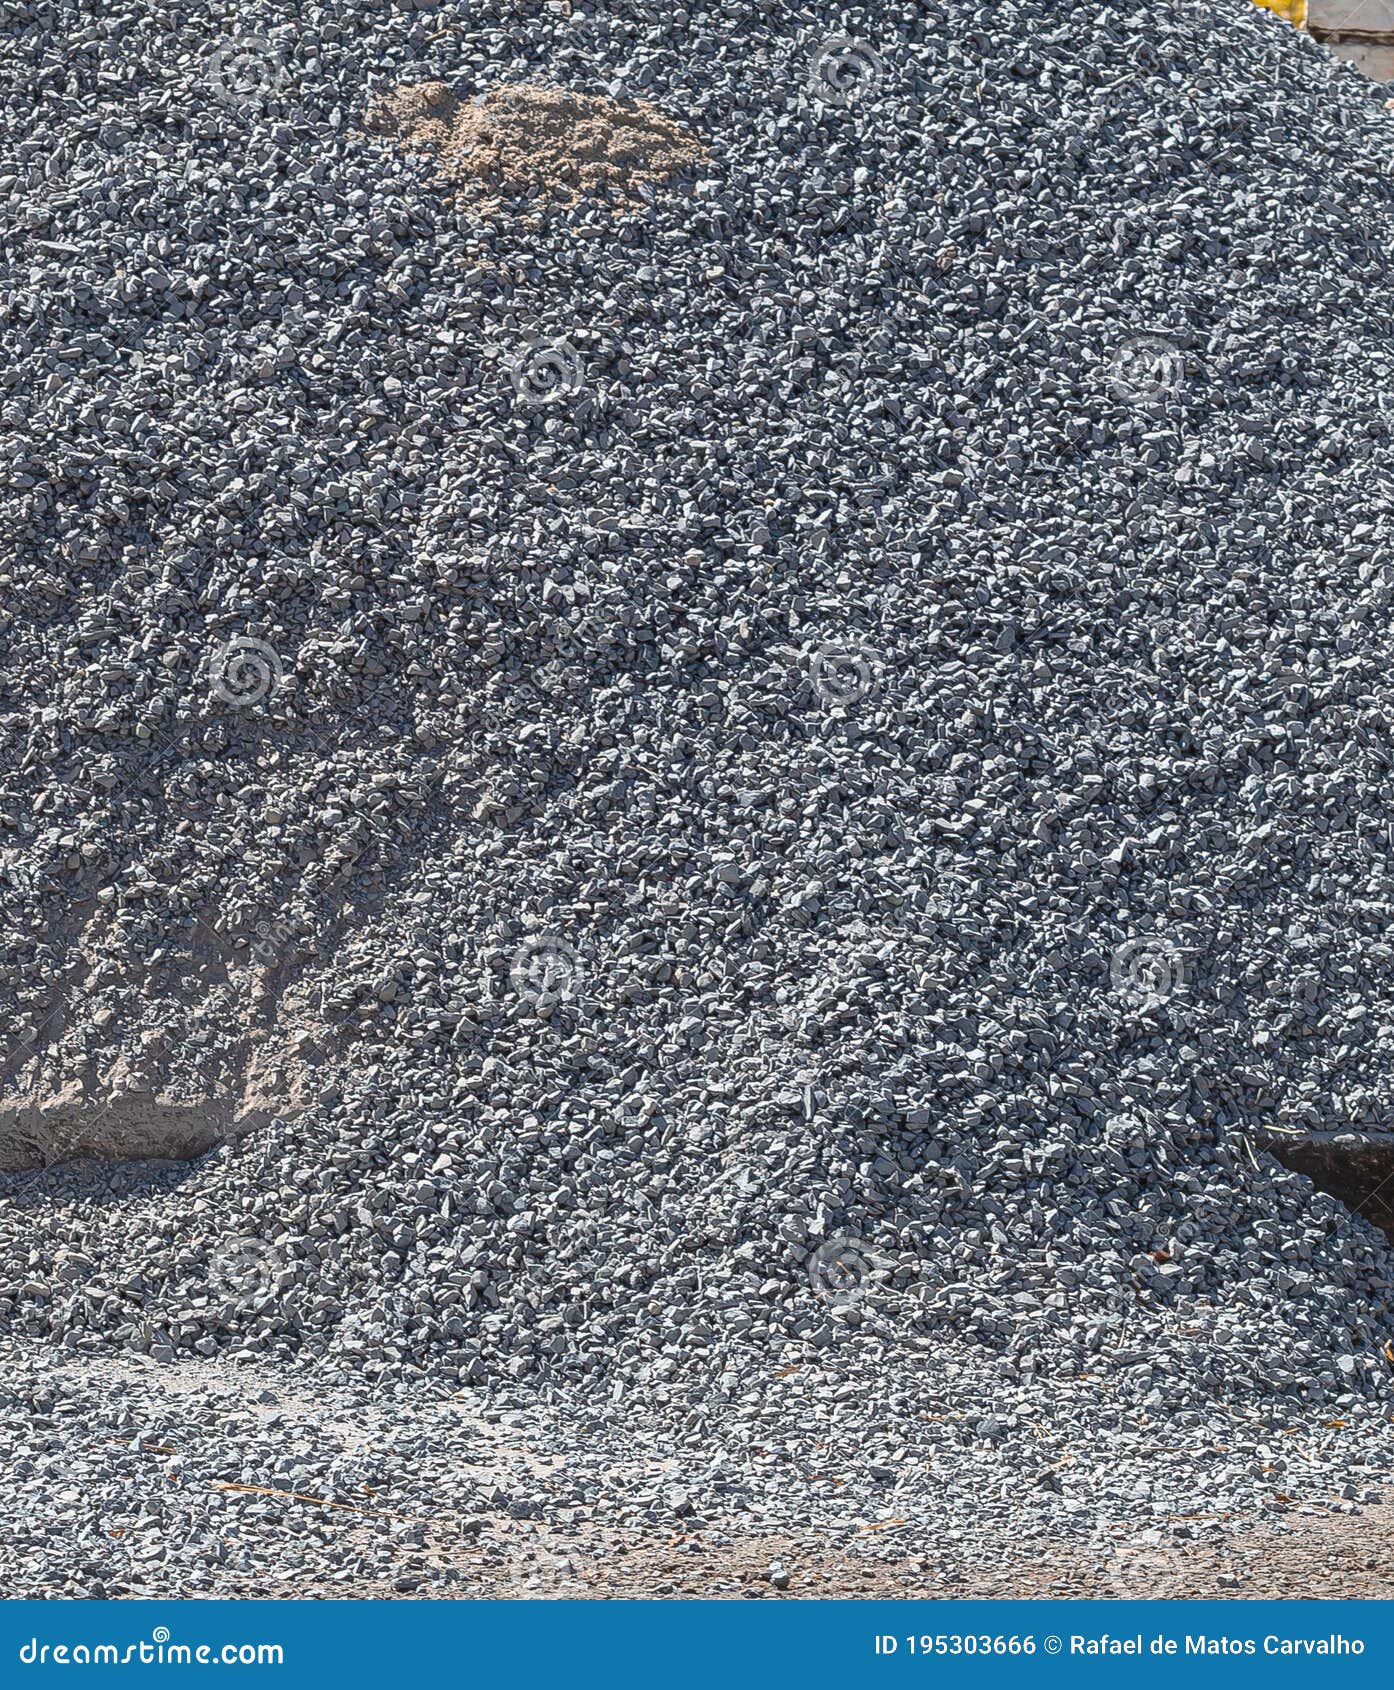 a lot of gravel stones - brita